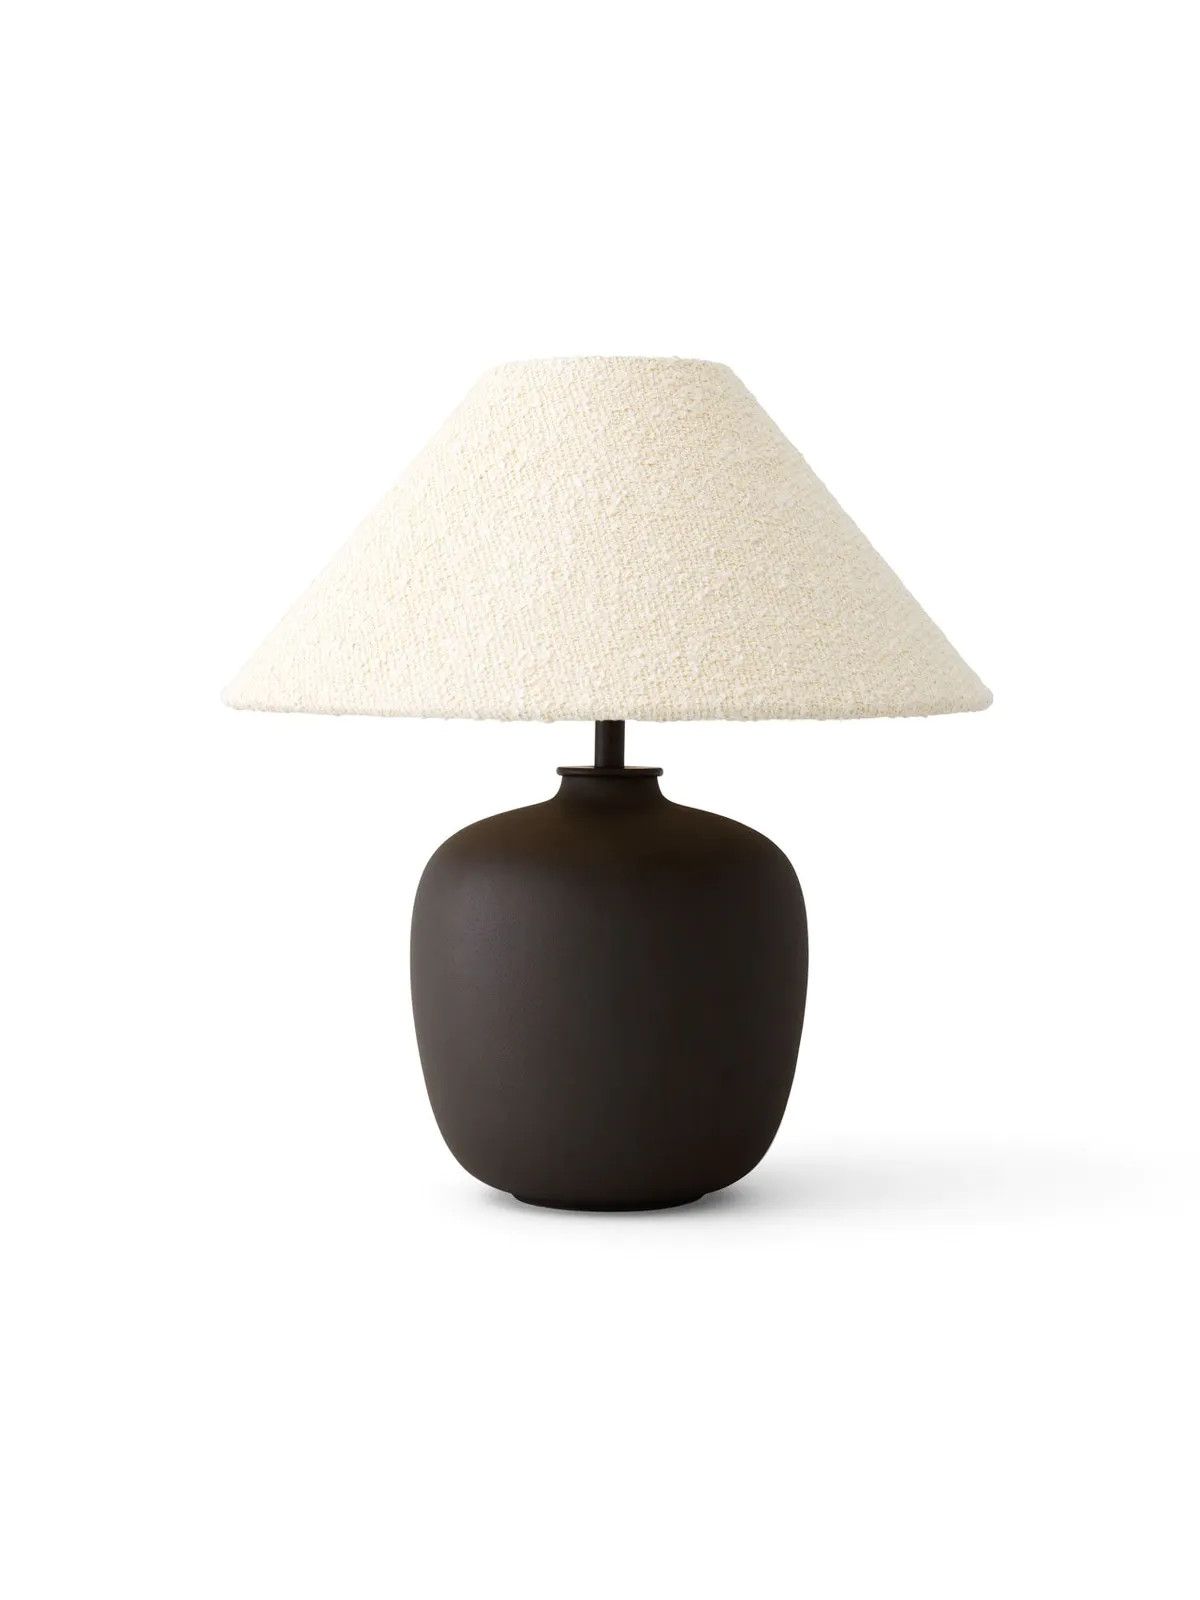 MENU Torso Lamp, Limited Edition | Verishop